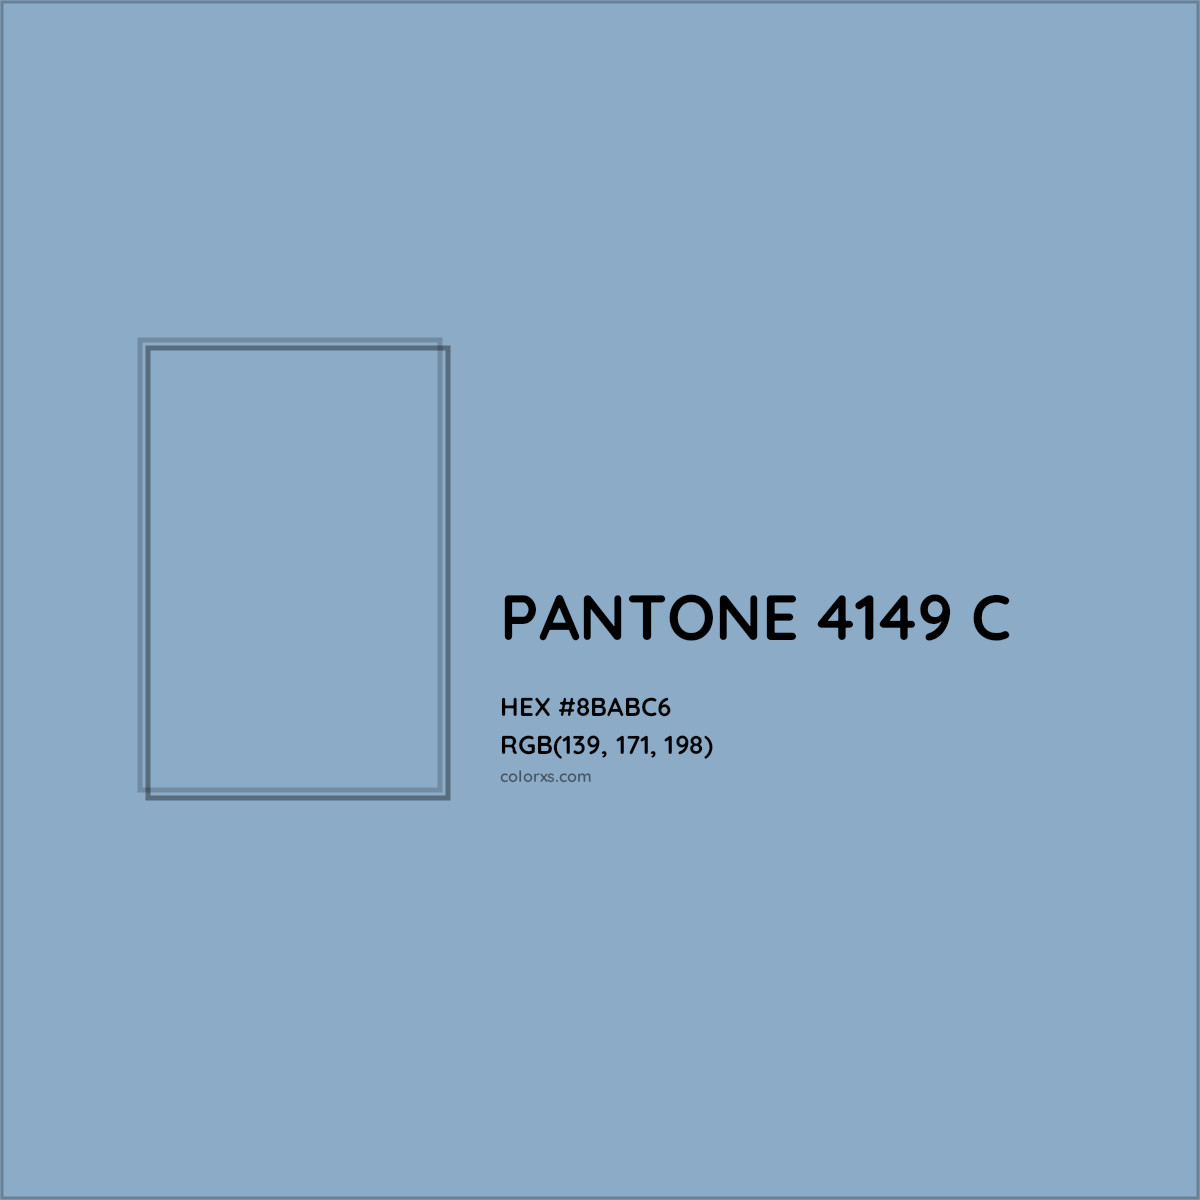 HEX #8BABC6 PANTONE 4149 C CMS Pantone PMS - Color Code